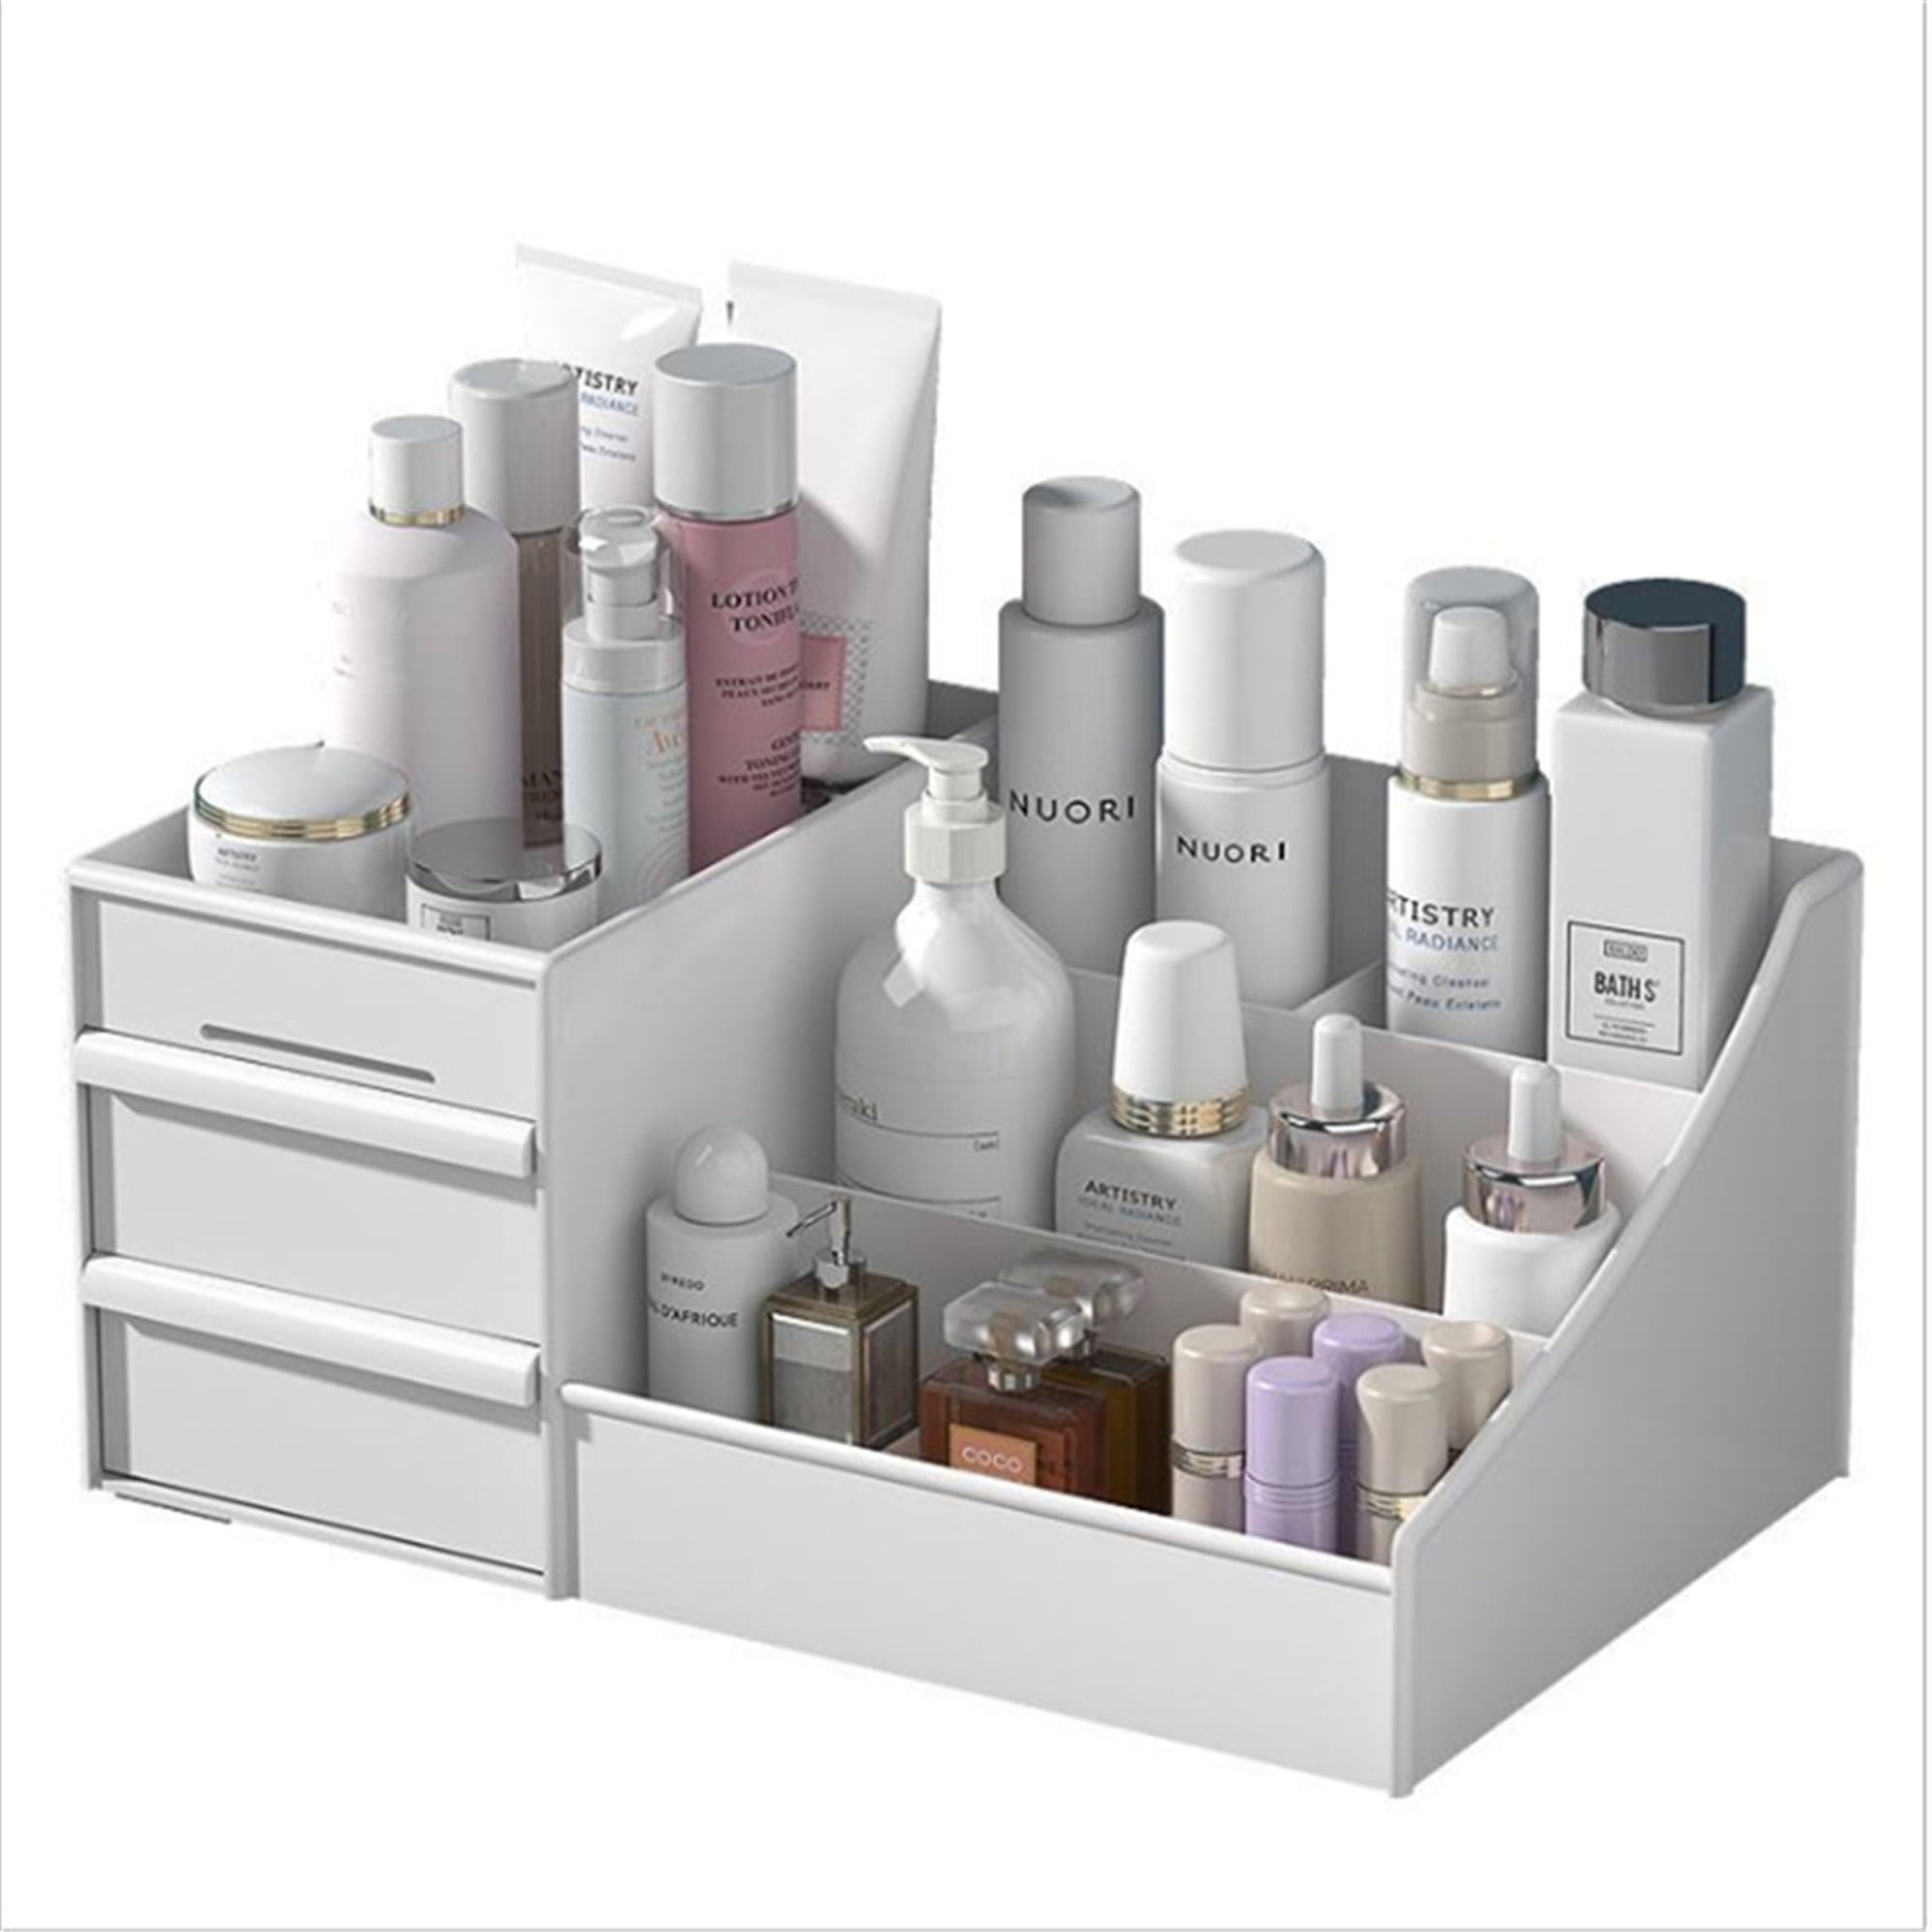 Aunavey Desk Makeup Drawer Organizers Multi-Purpose Storage Box